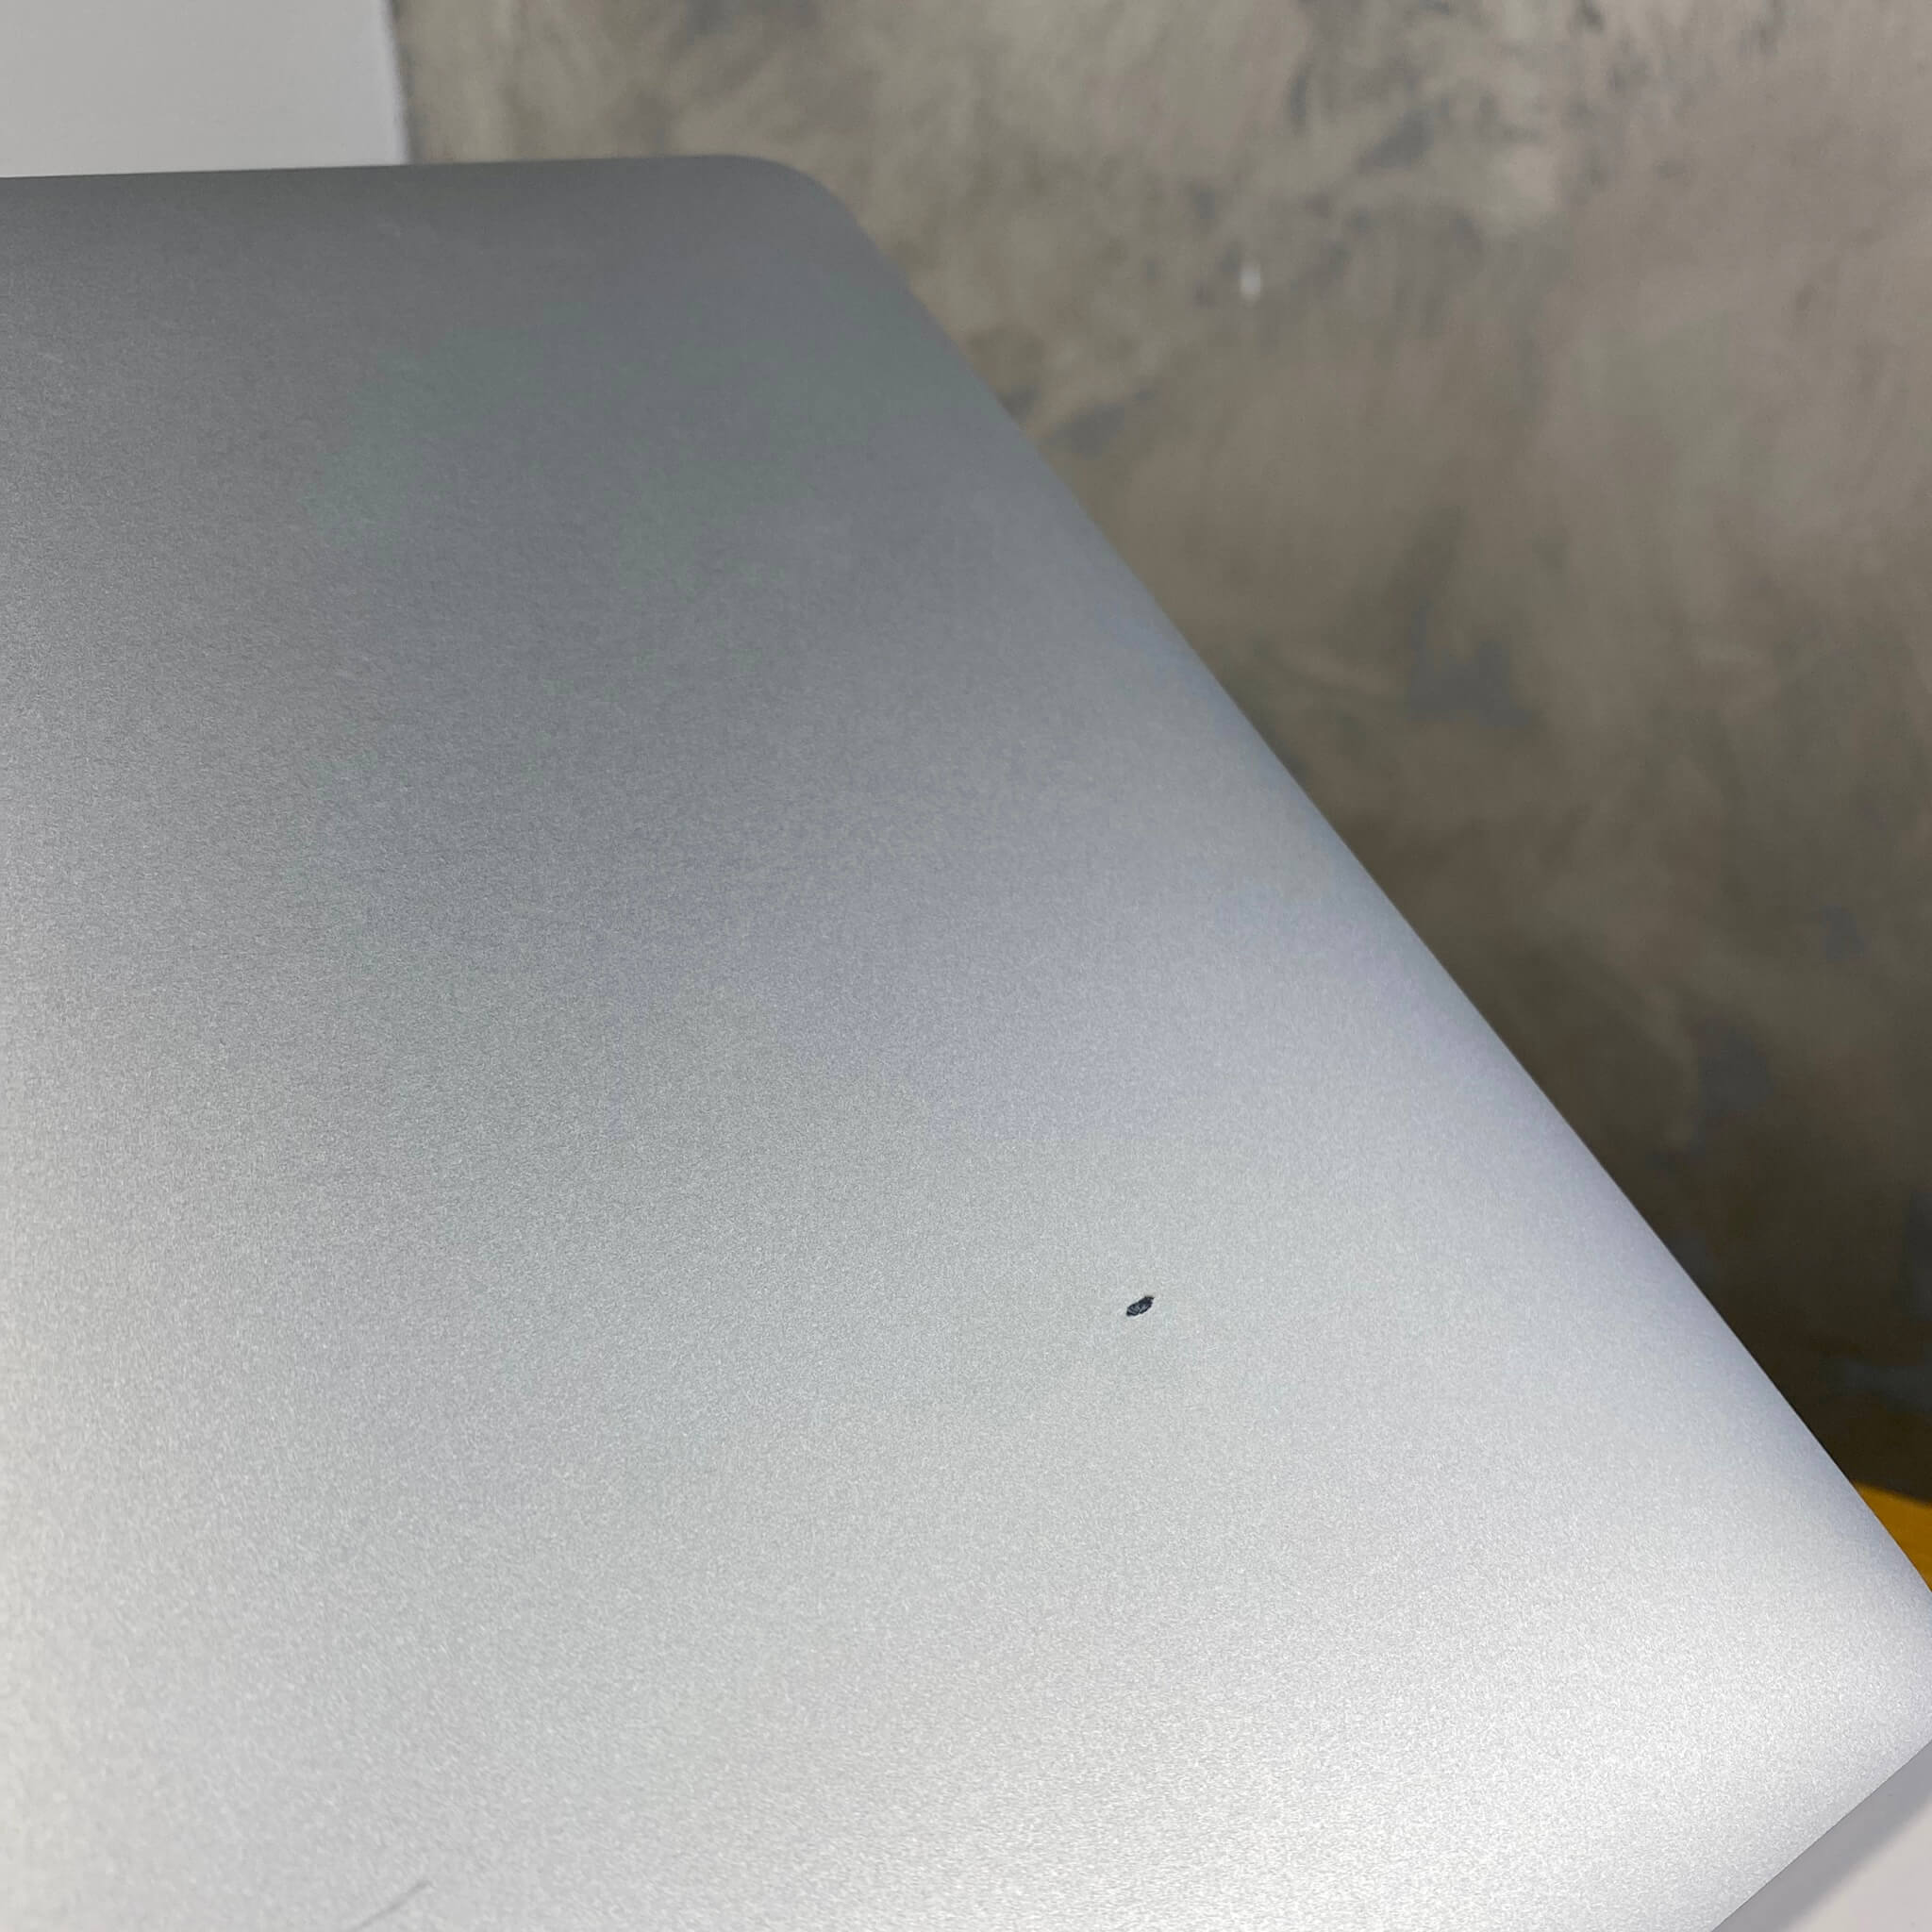 MacBook Air 13", Apple M1, Silver, 8GB RAM, 256GB SSD